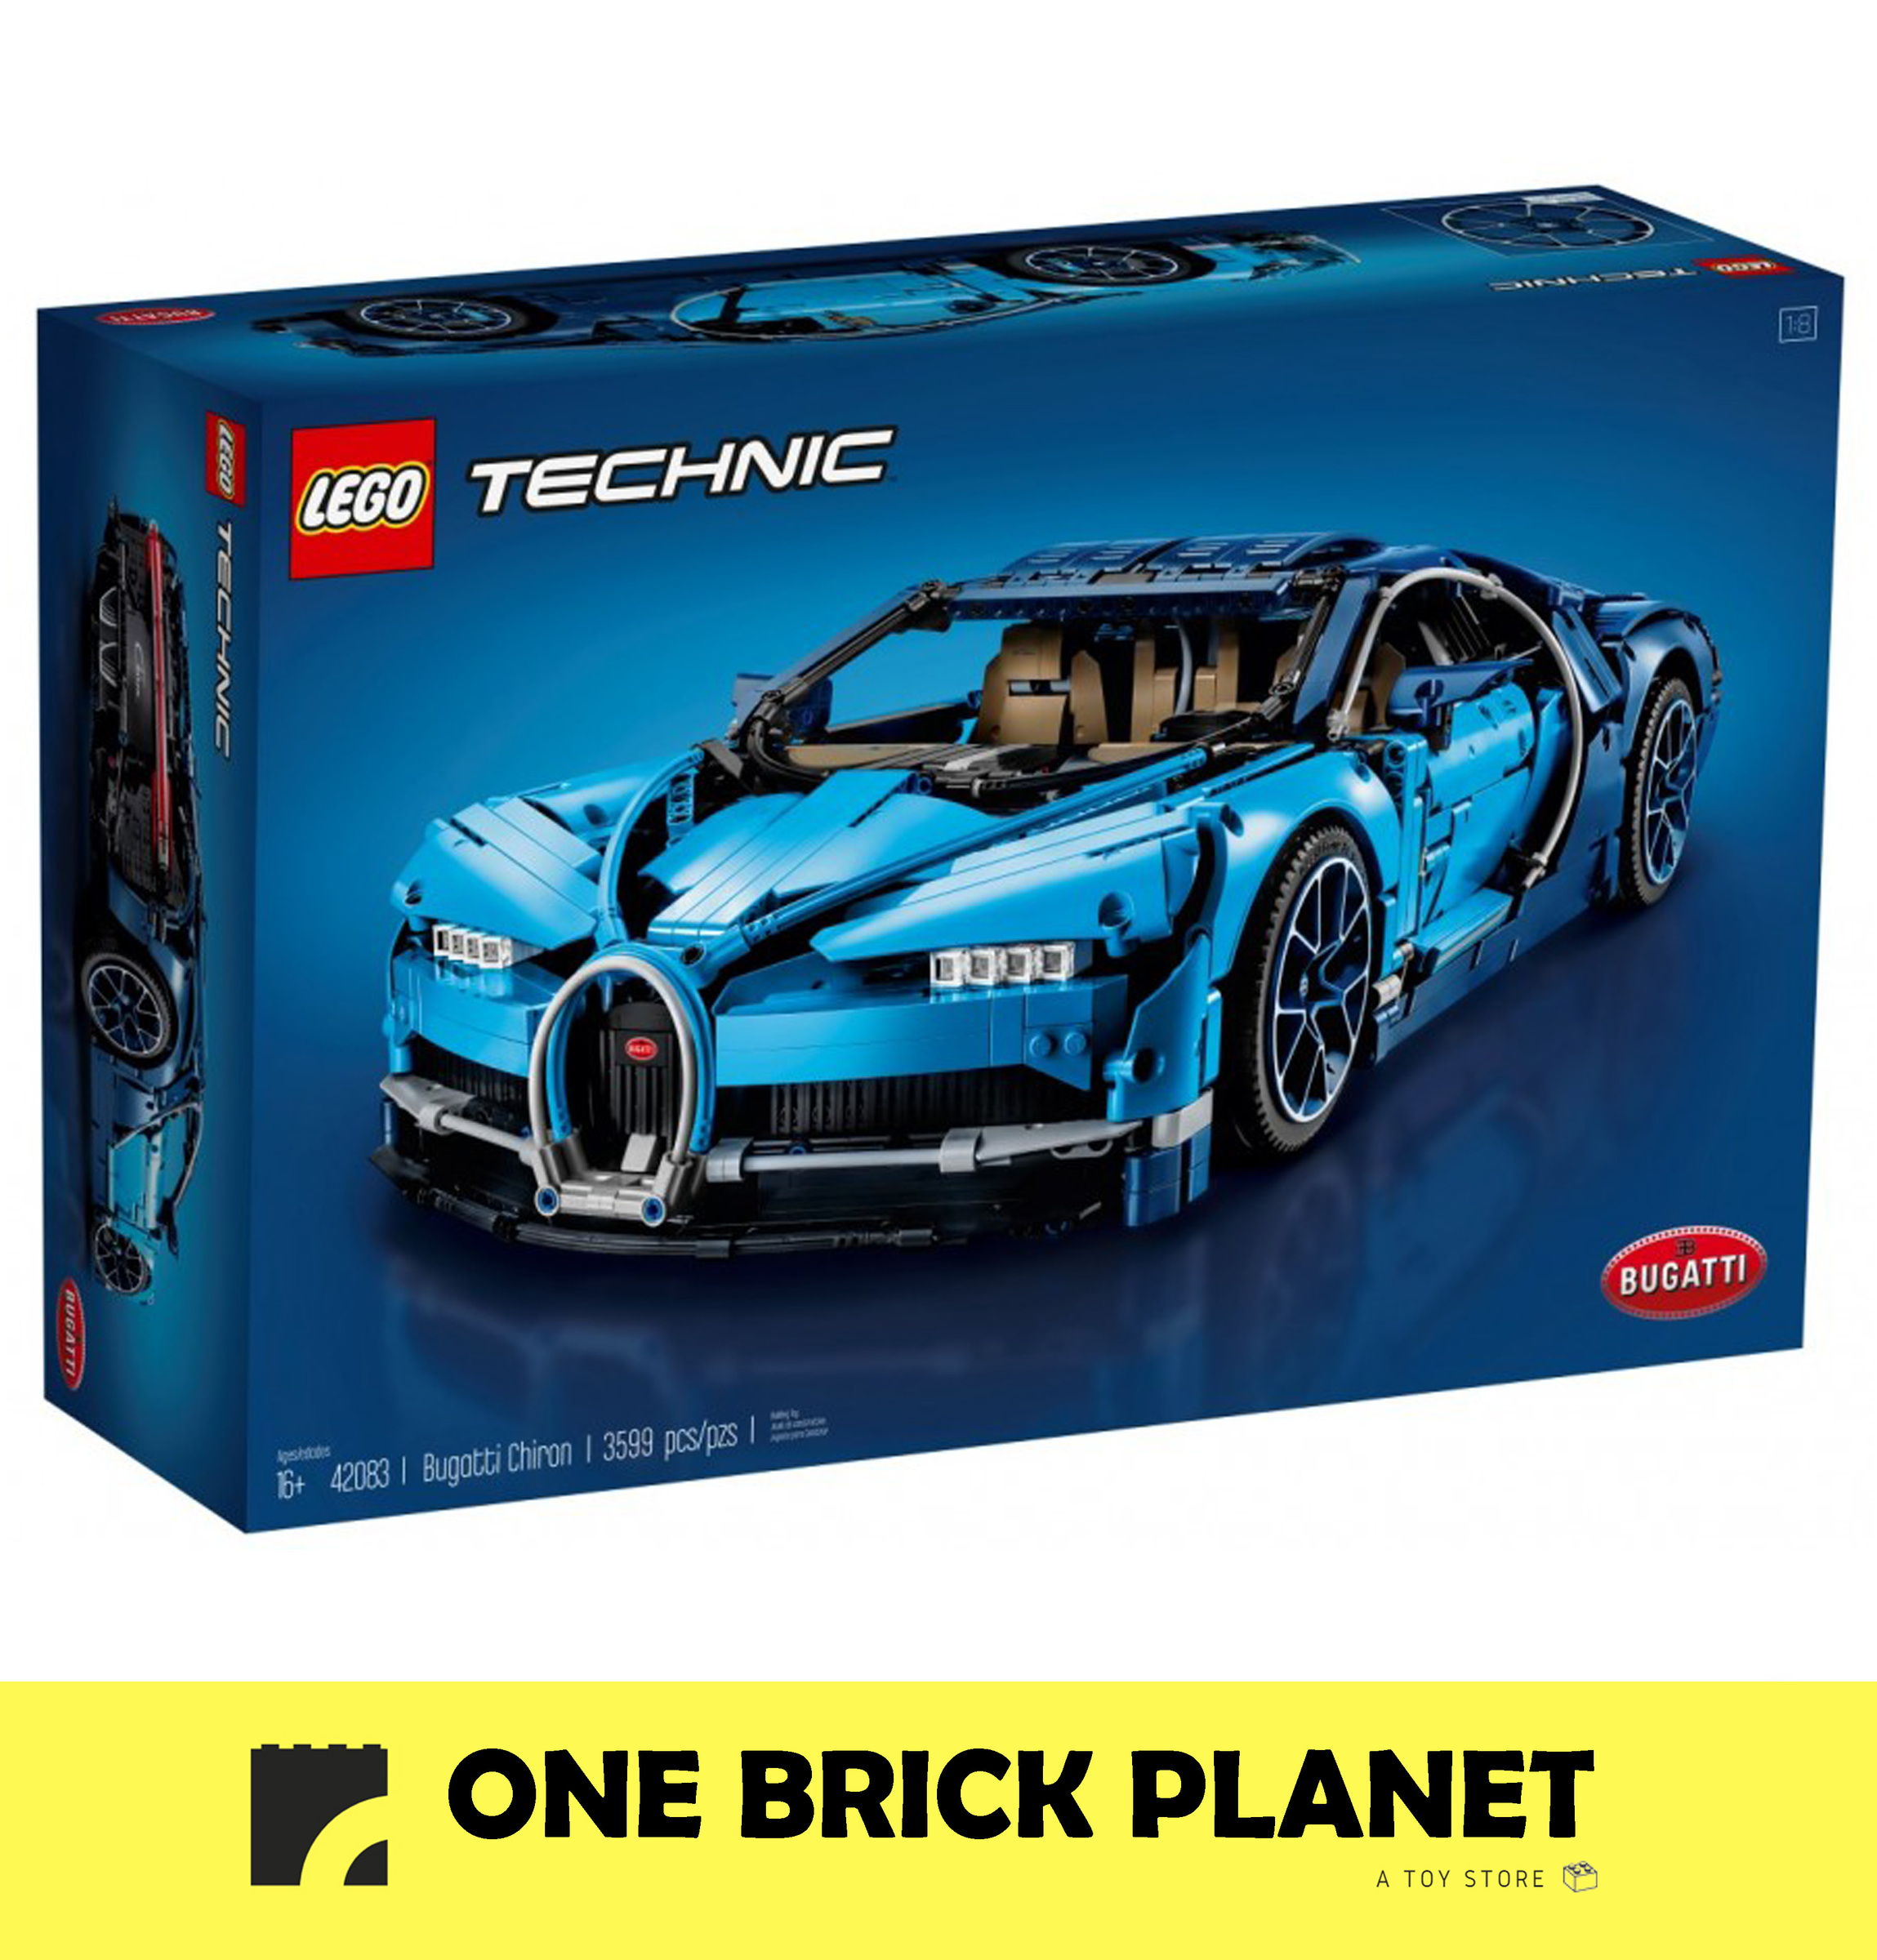 Lego Technic 42083 - – One Brick Planet